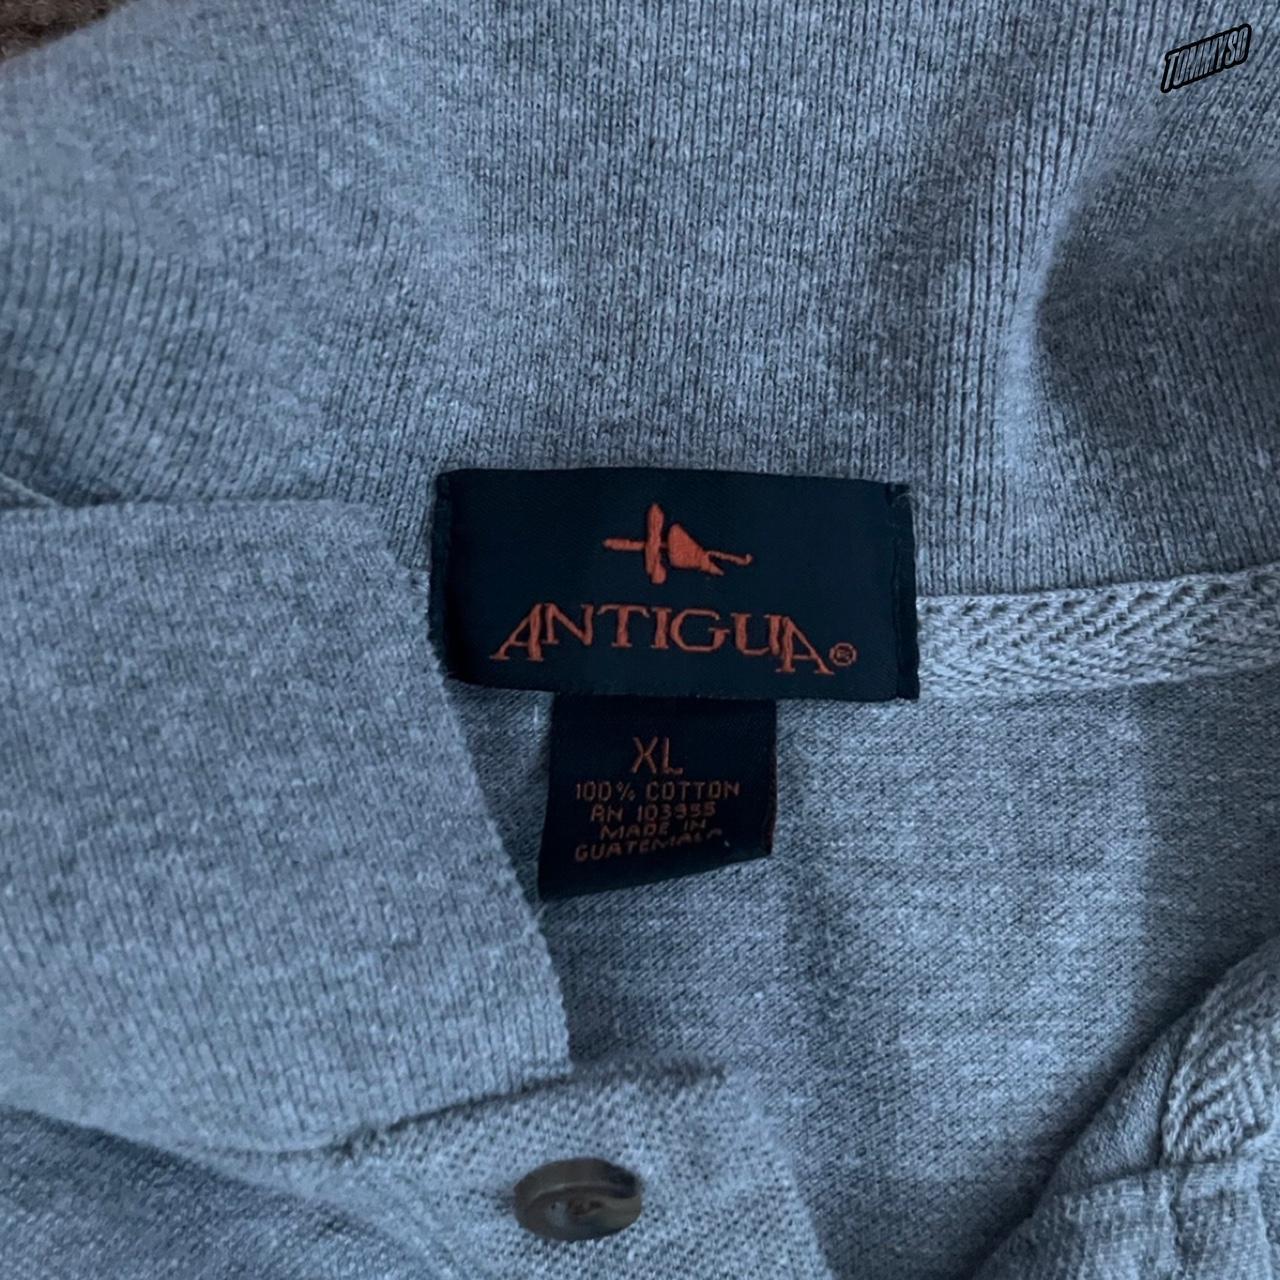 Medium, Vintage Antigua Polo Shirt with Chicago Cubs - Depop